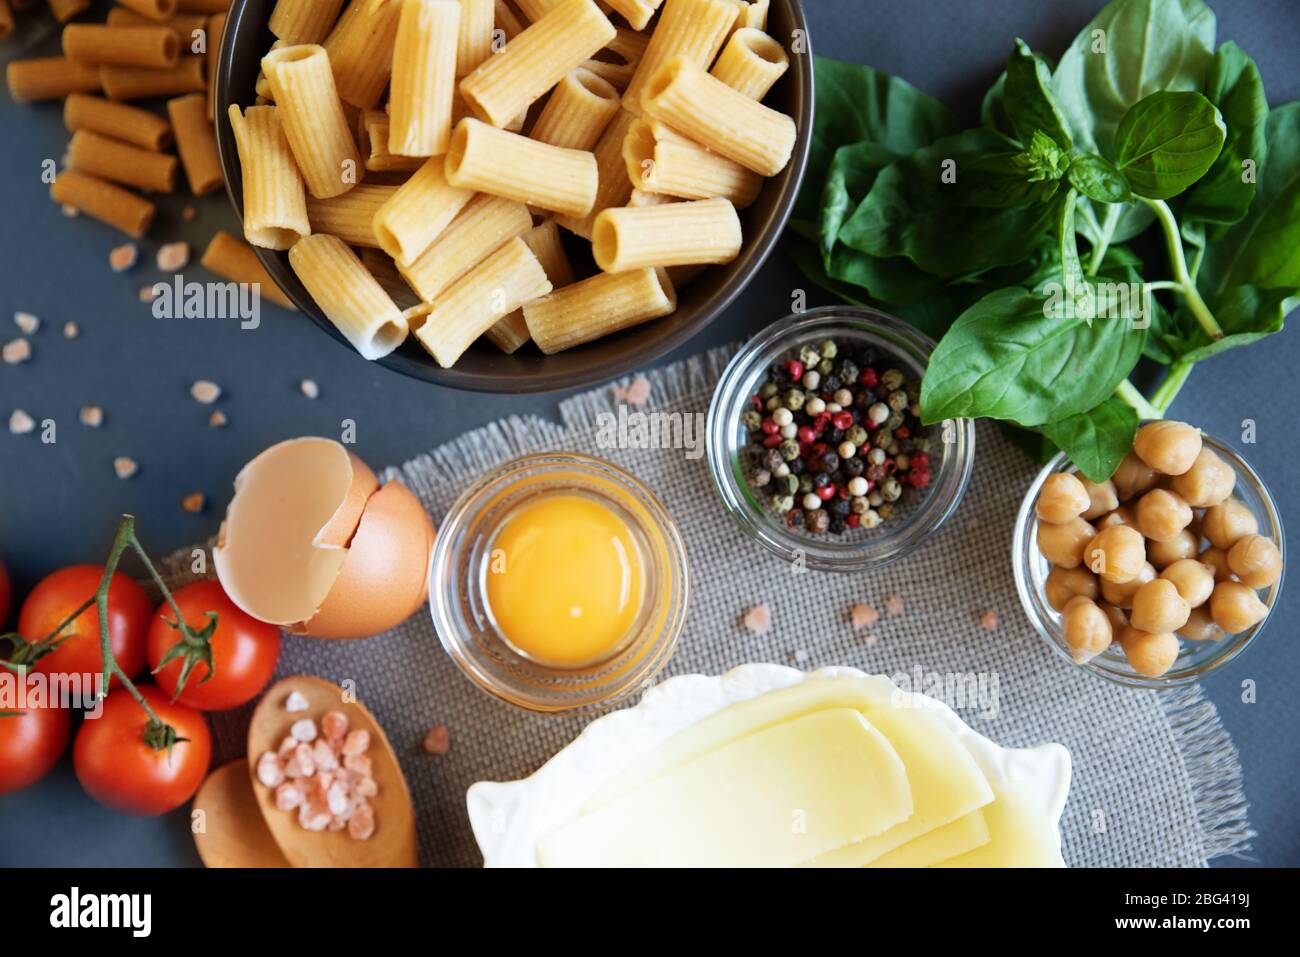 Rigatoni pasta and vegetable ingredients Stock Photo